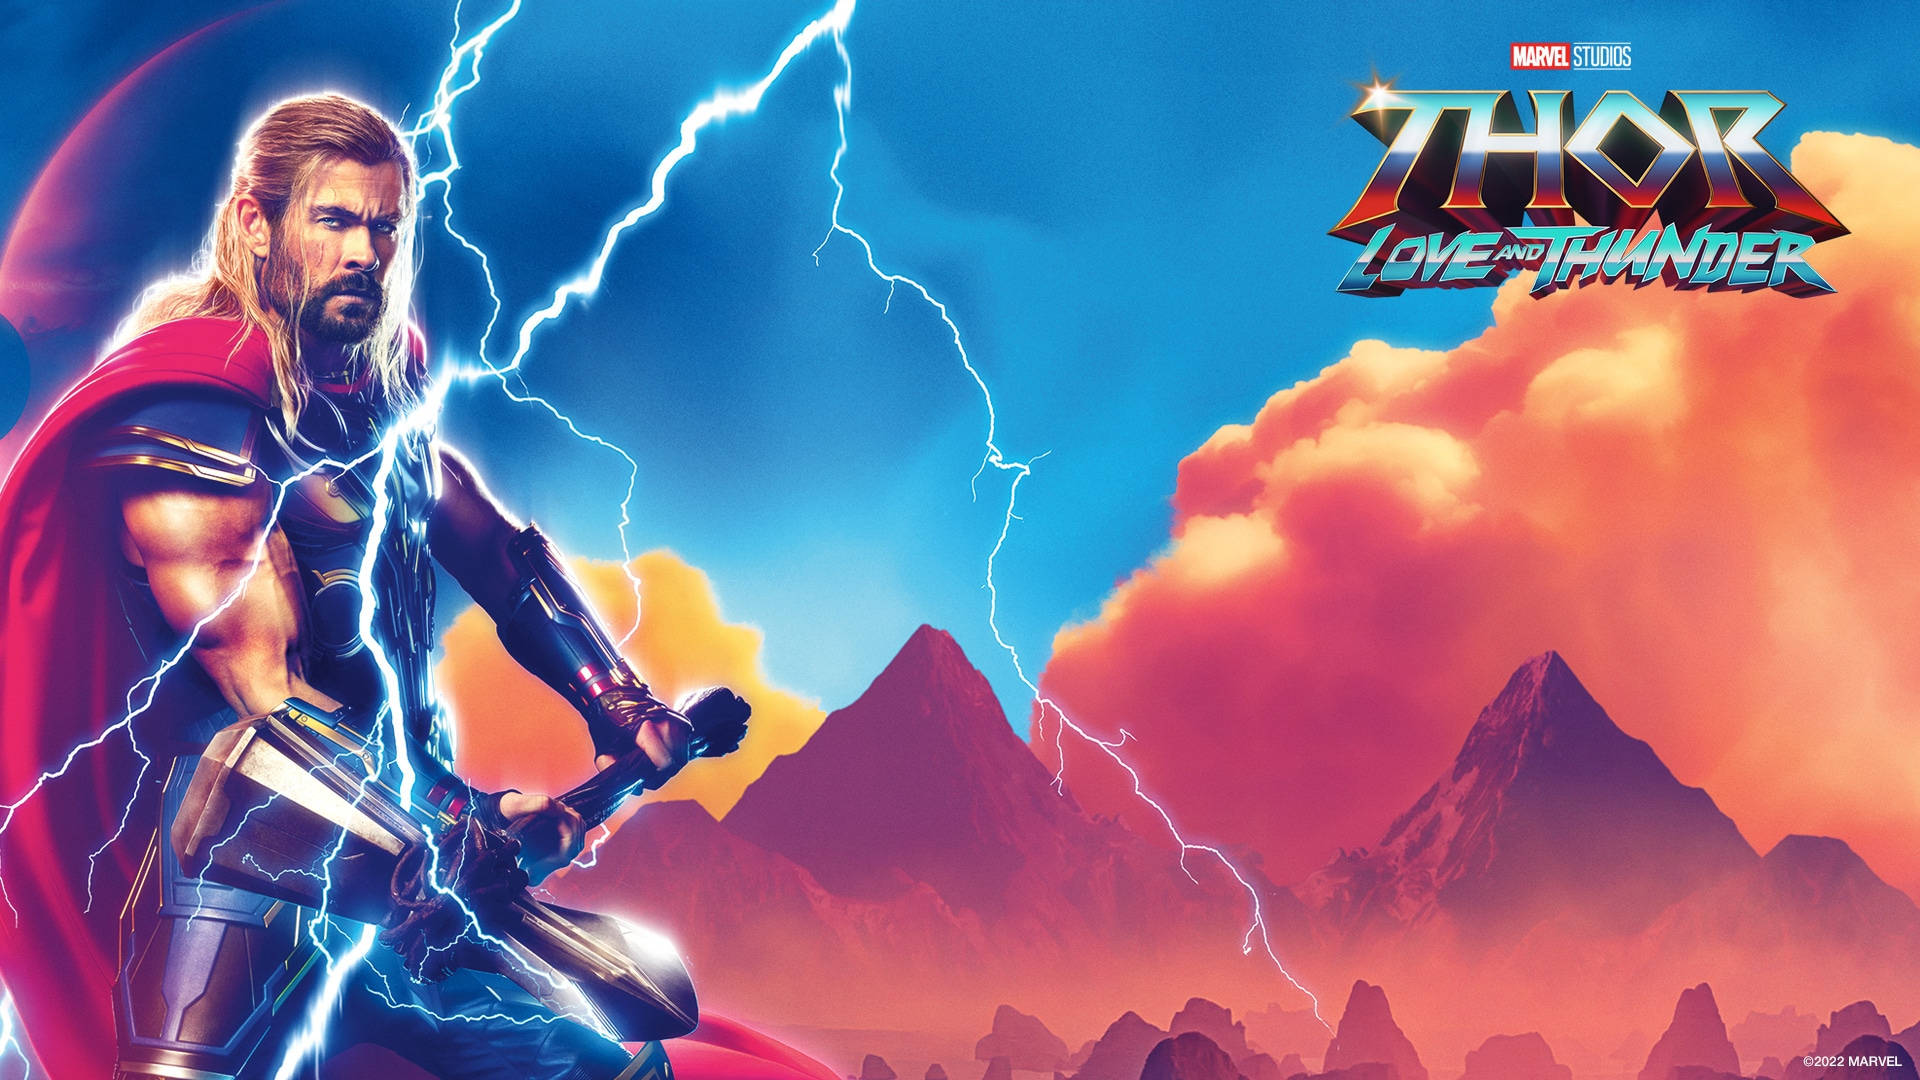 Thor Superhero Movie Digital Poster Wallpaper